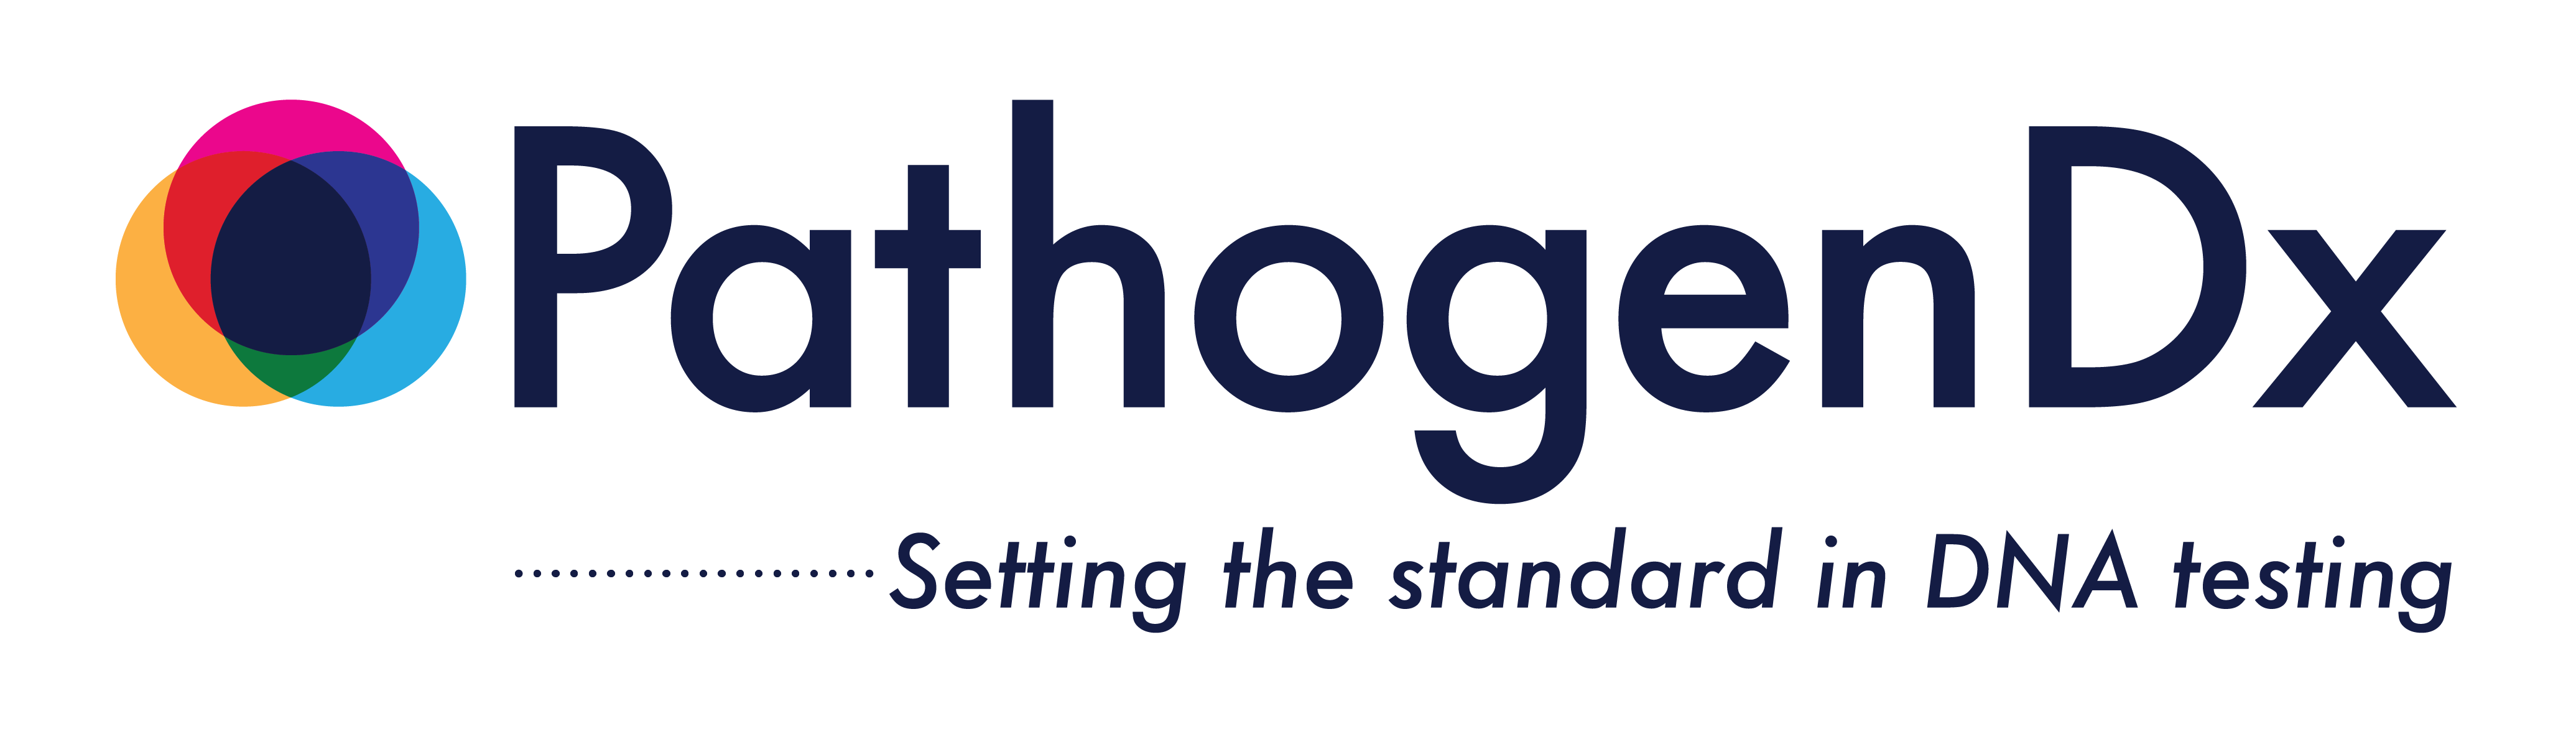 pathogenDX logo